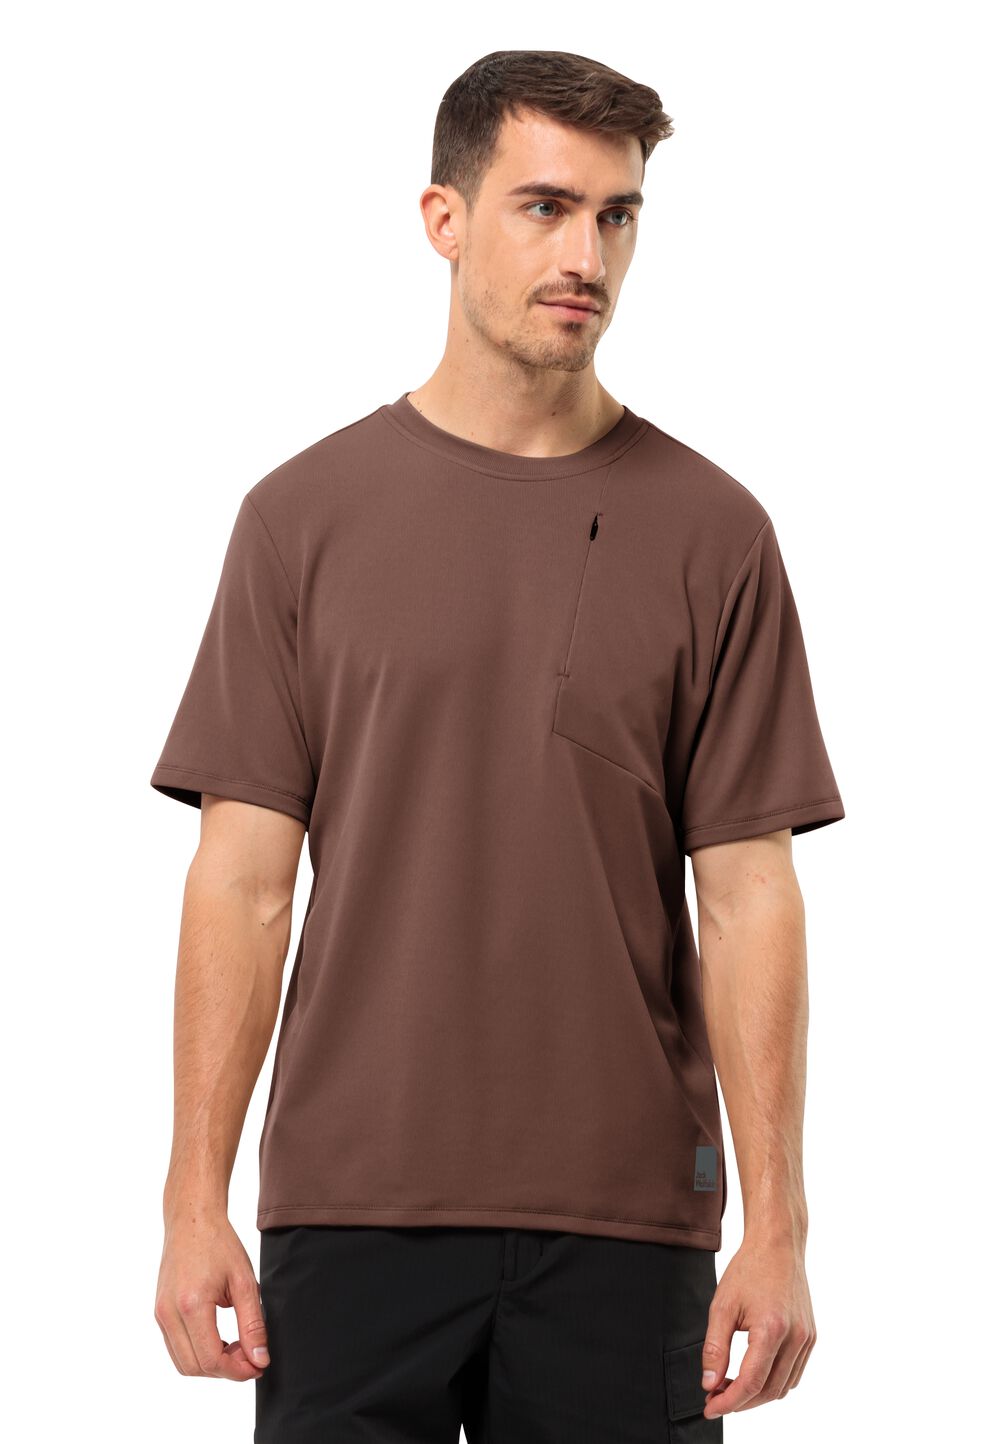 Jack Wolfskin Bike Commute T-Shirt Men Functioneel shirt Heren XL bruin dark rust